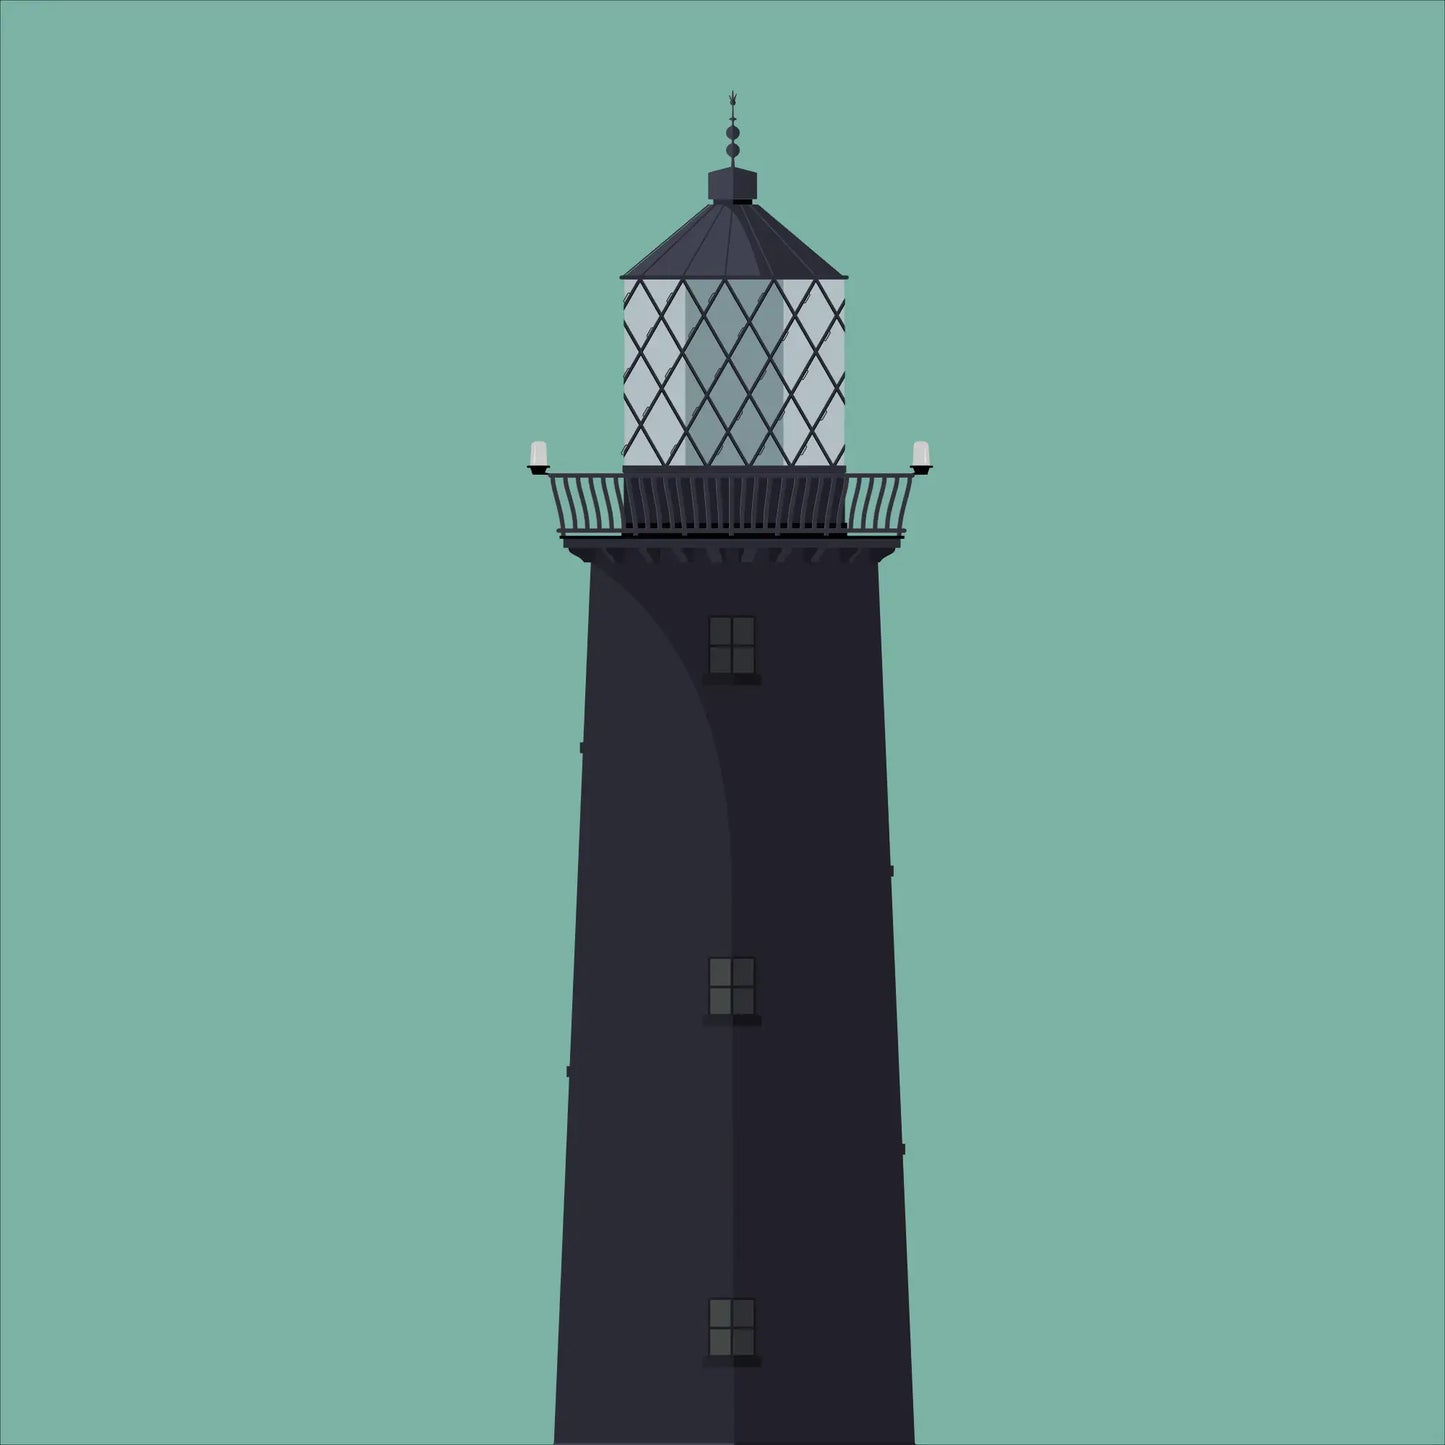 Illustration of Slyne_Head lighthouse on a white background inside light blue square.